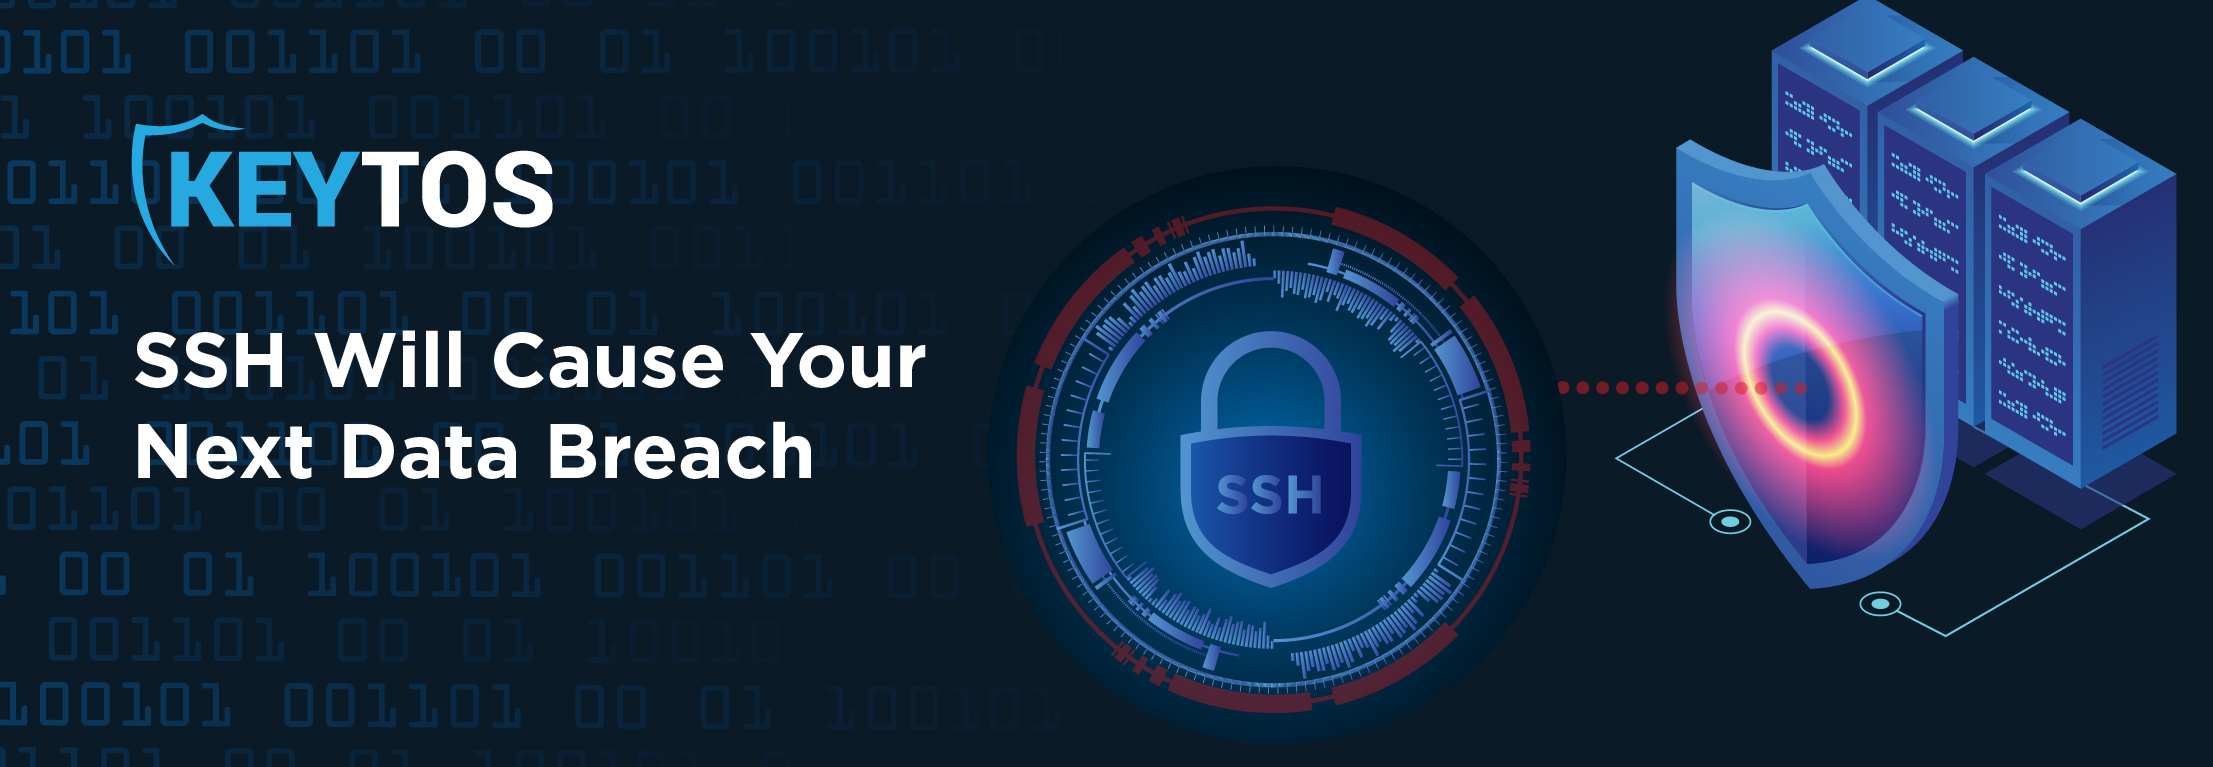 SSH keys cause data breaches